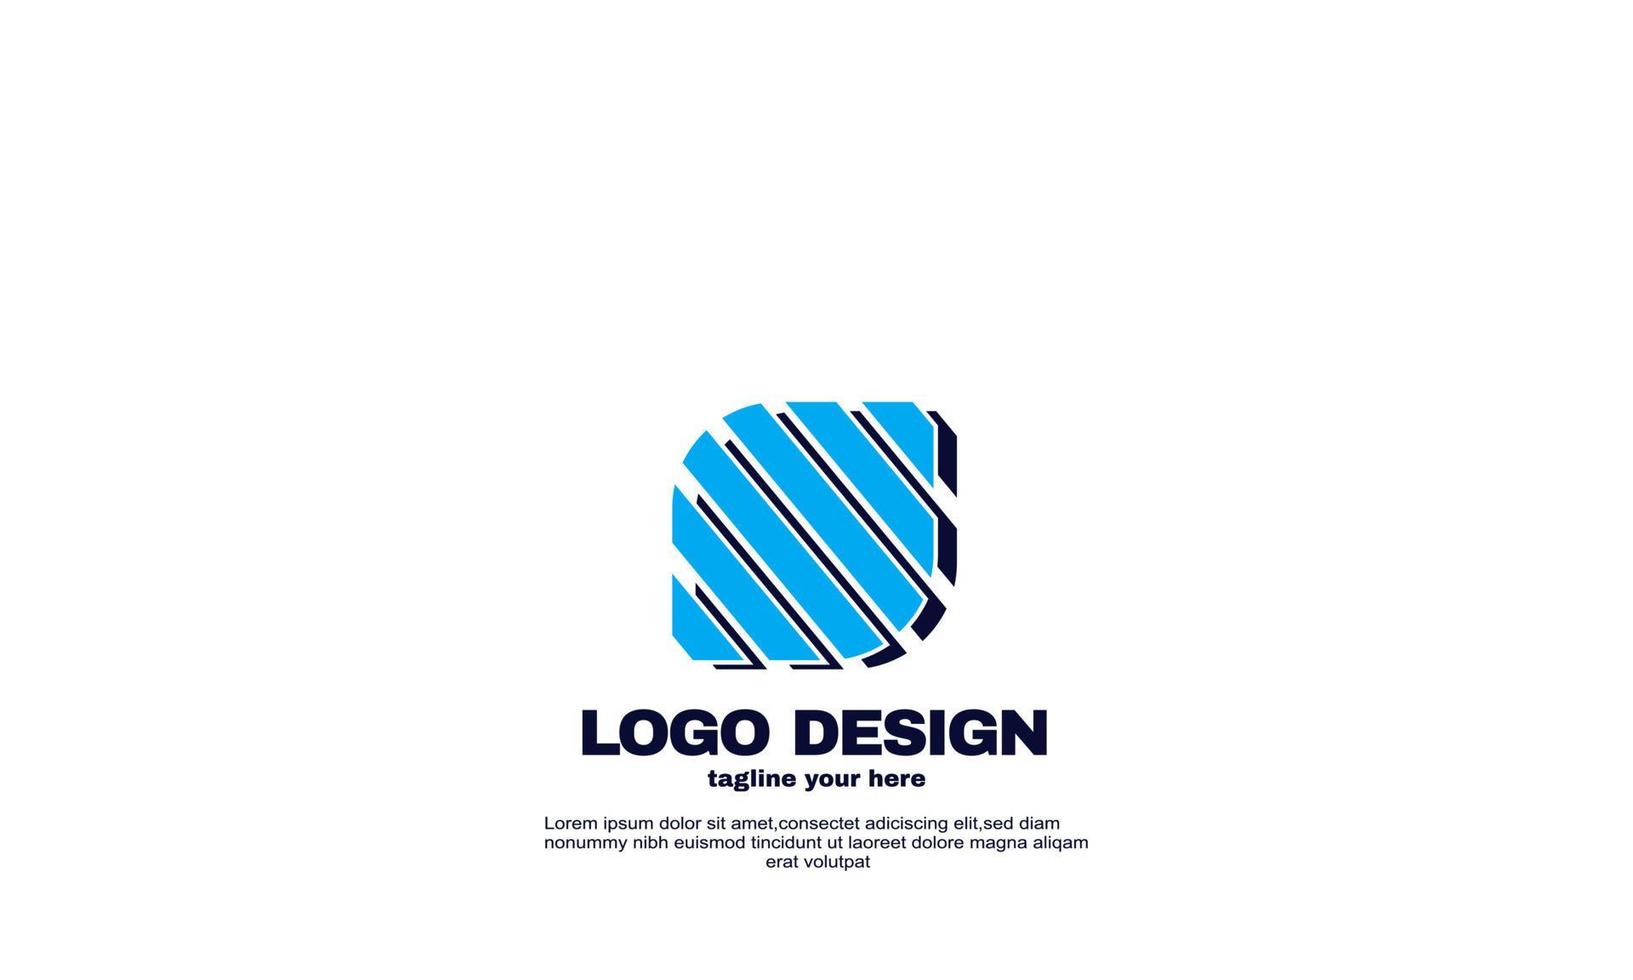 Vektor abstraktes einfaches Networking-Logo Corporate Company Business- und Branding-Design